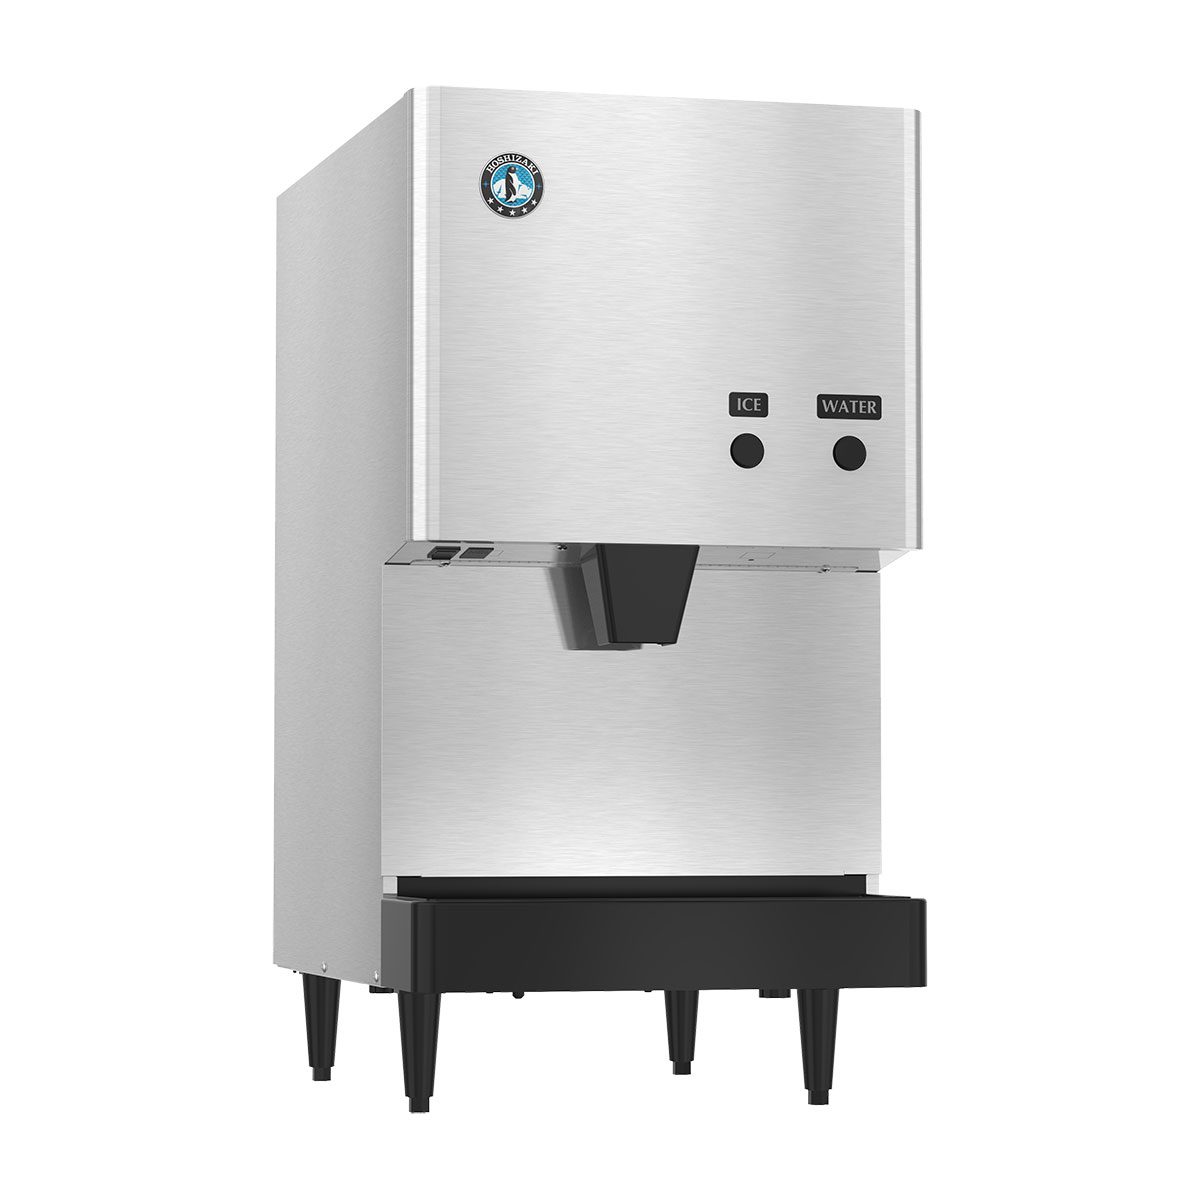 https://shivakitchen.com/wp-content/uploads/2021/03/Combination-Ice-and-Water-Dispensers-Machines.jpg